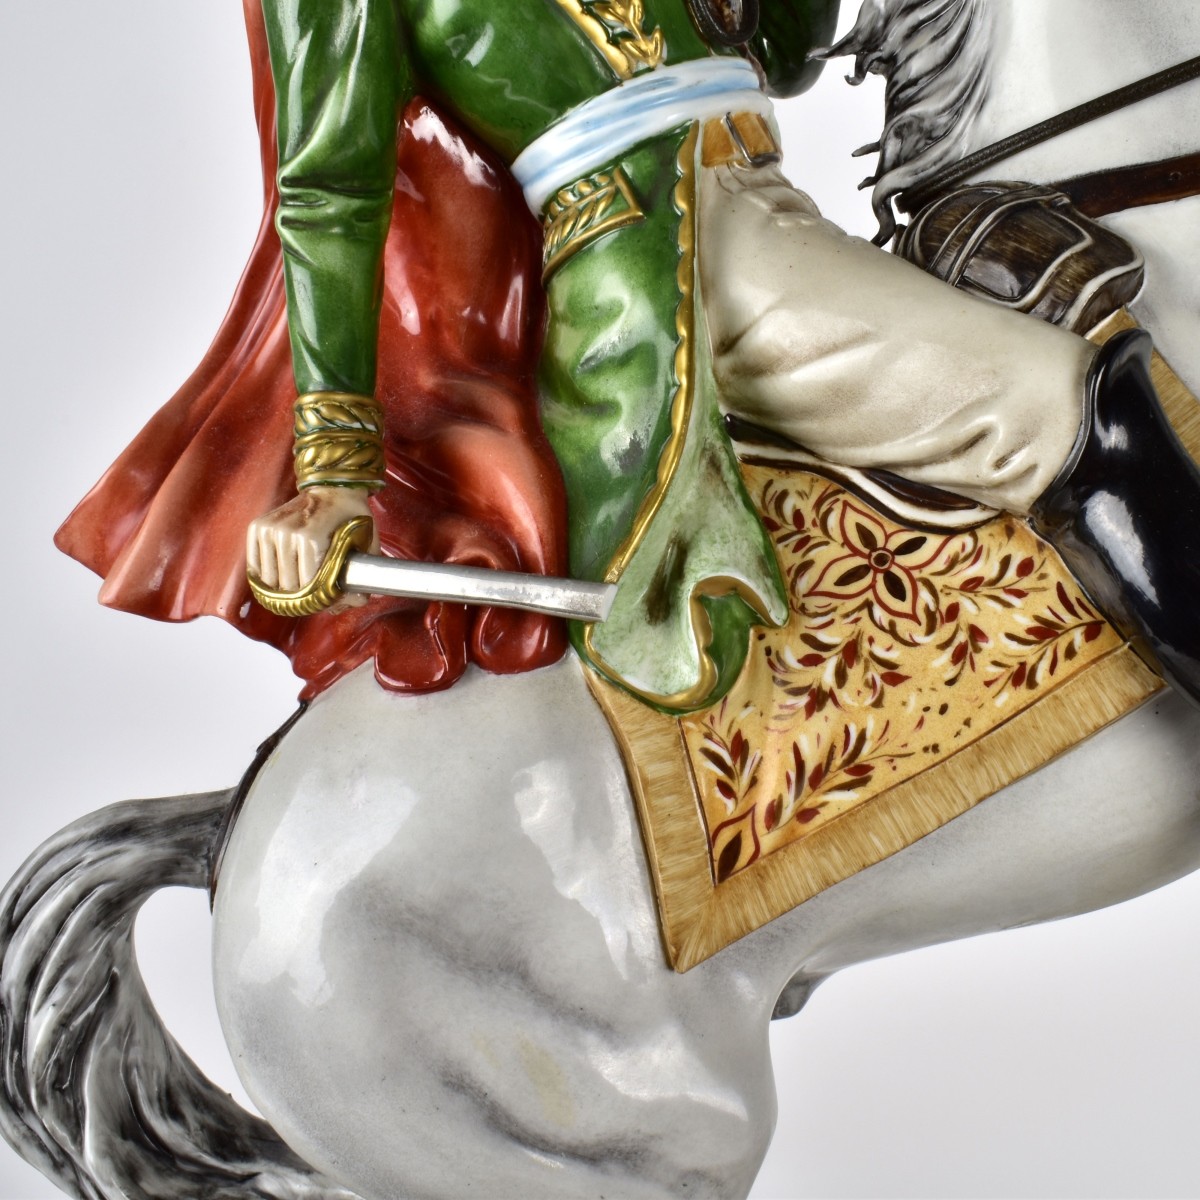 Large Capodimonte Napoleon Figurine